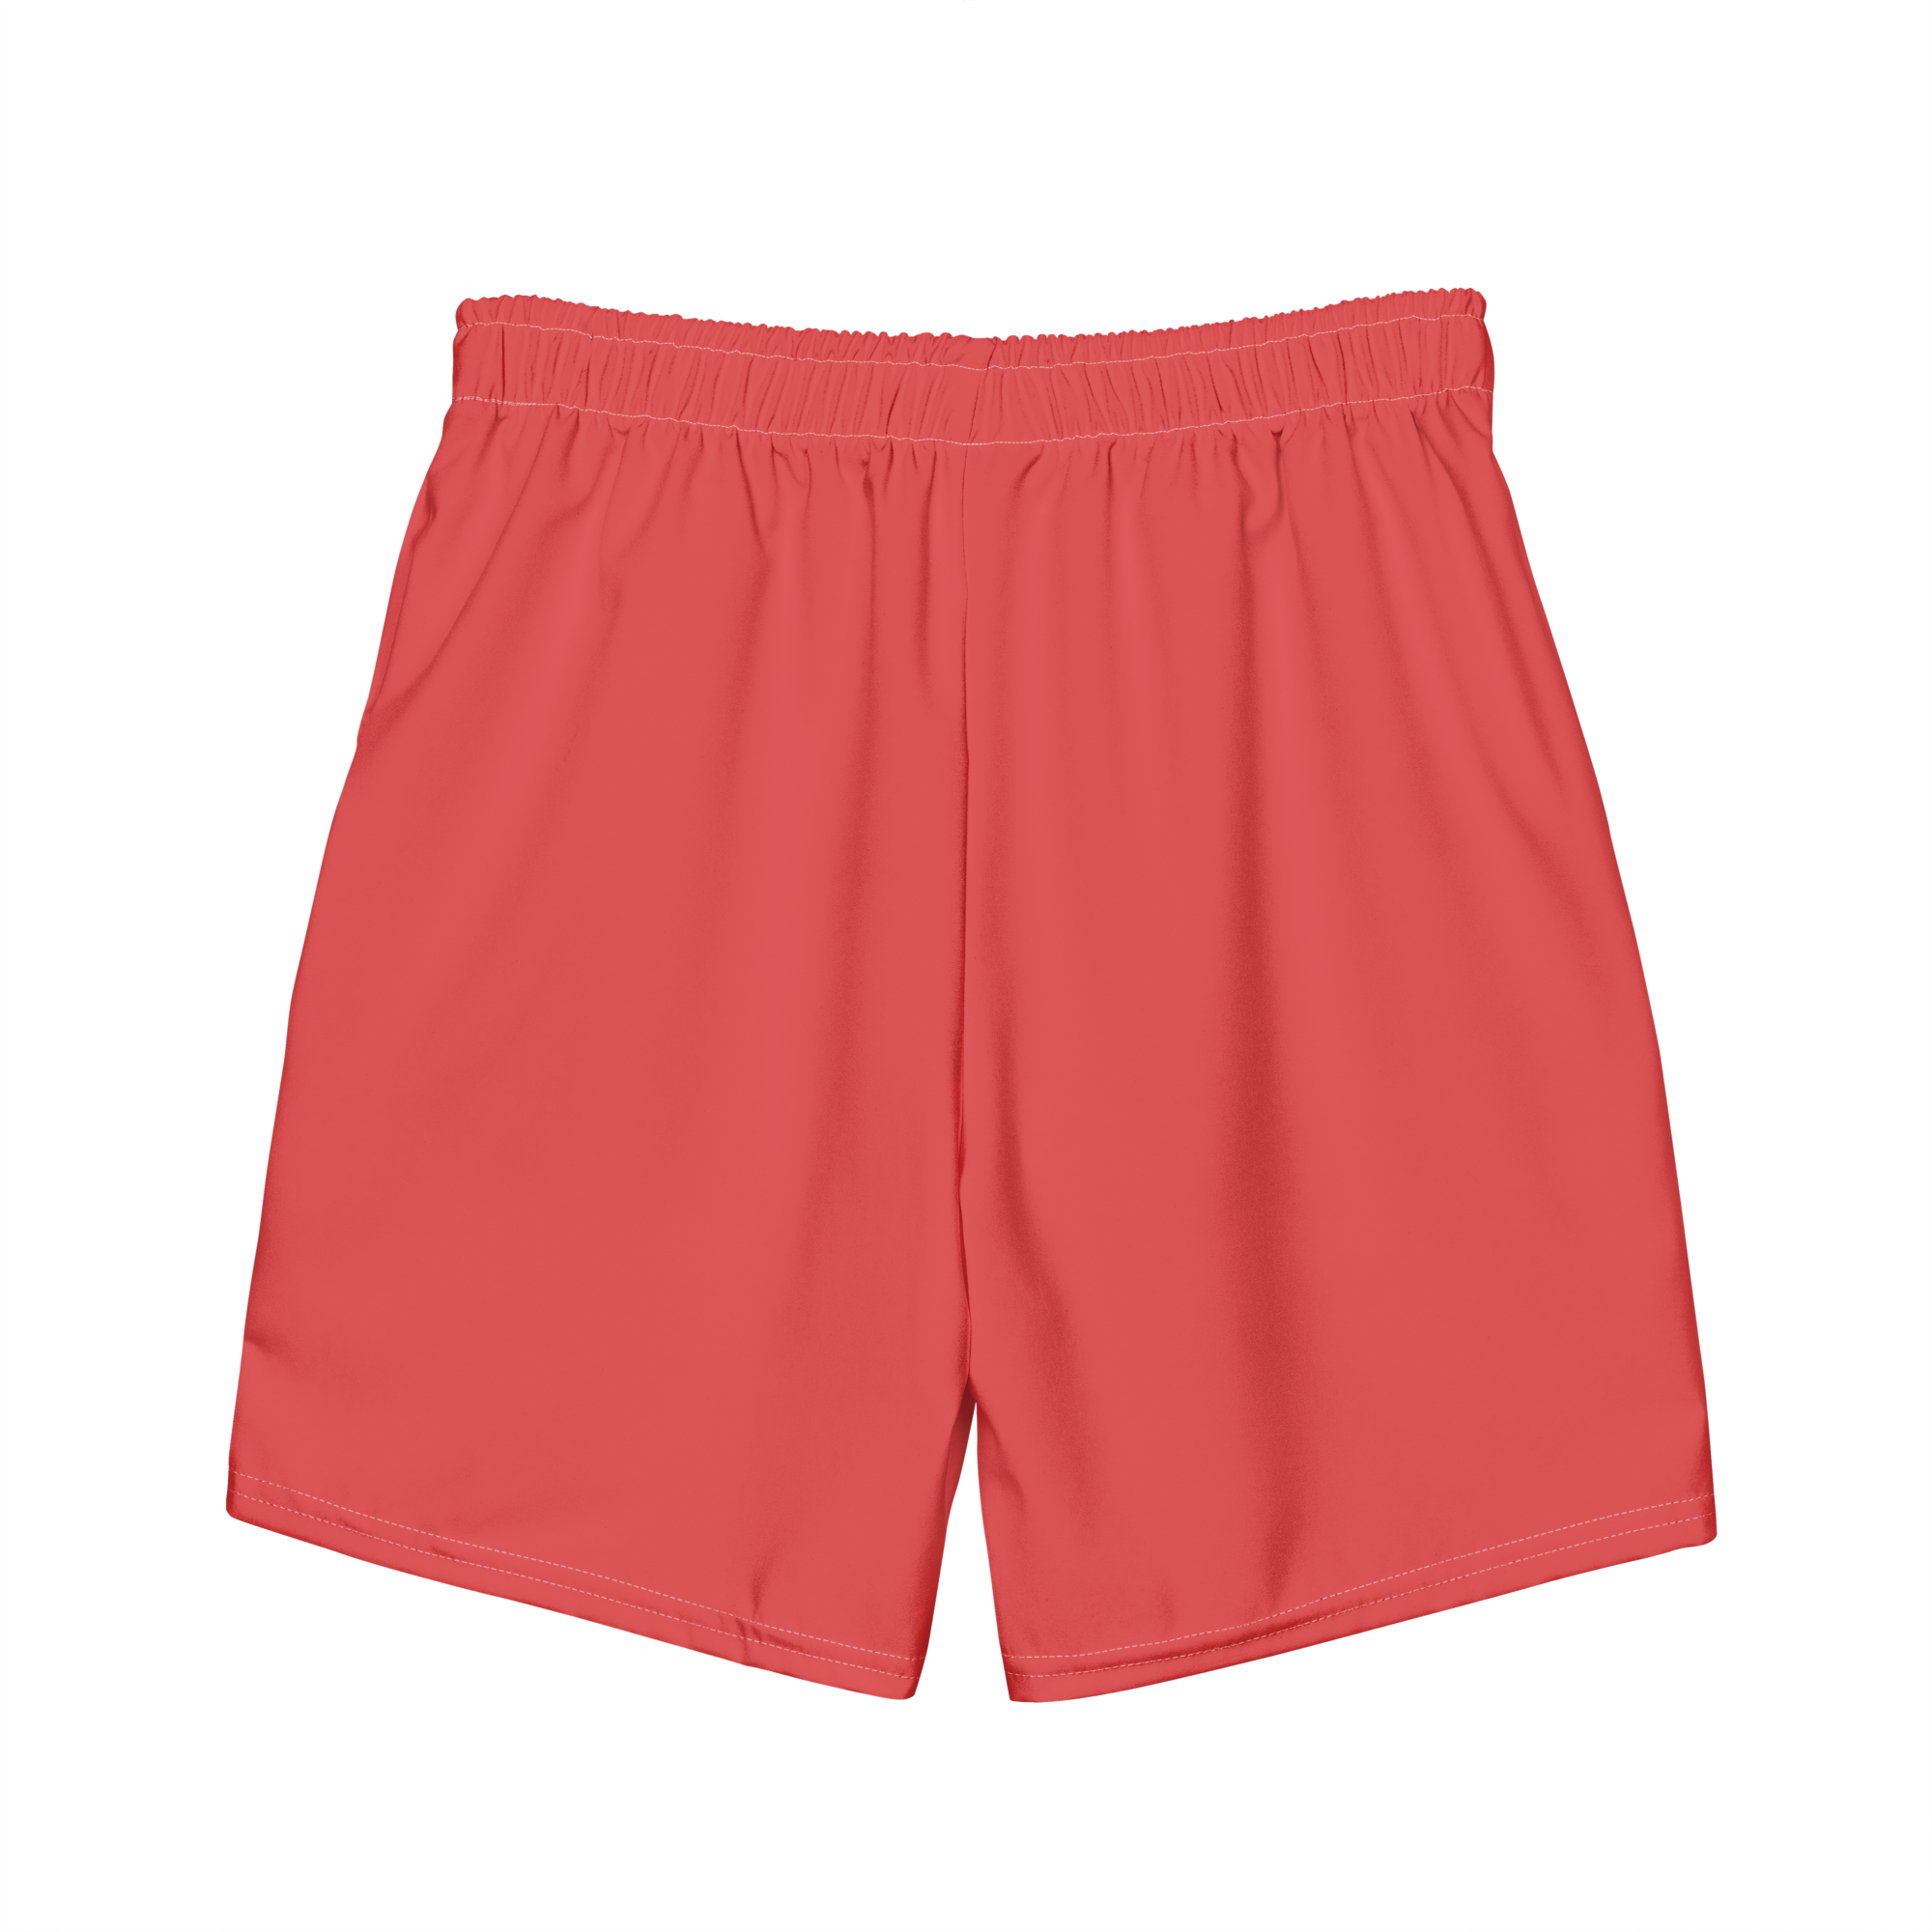 Jail Hose Board Shorts - Greg Noll Style Vintage Swim Trunks | Evoke Apparel - red - back